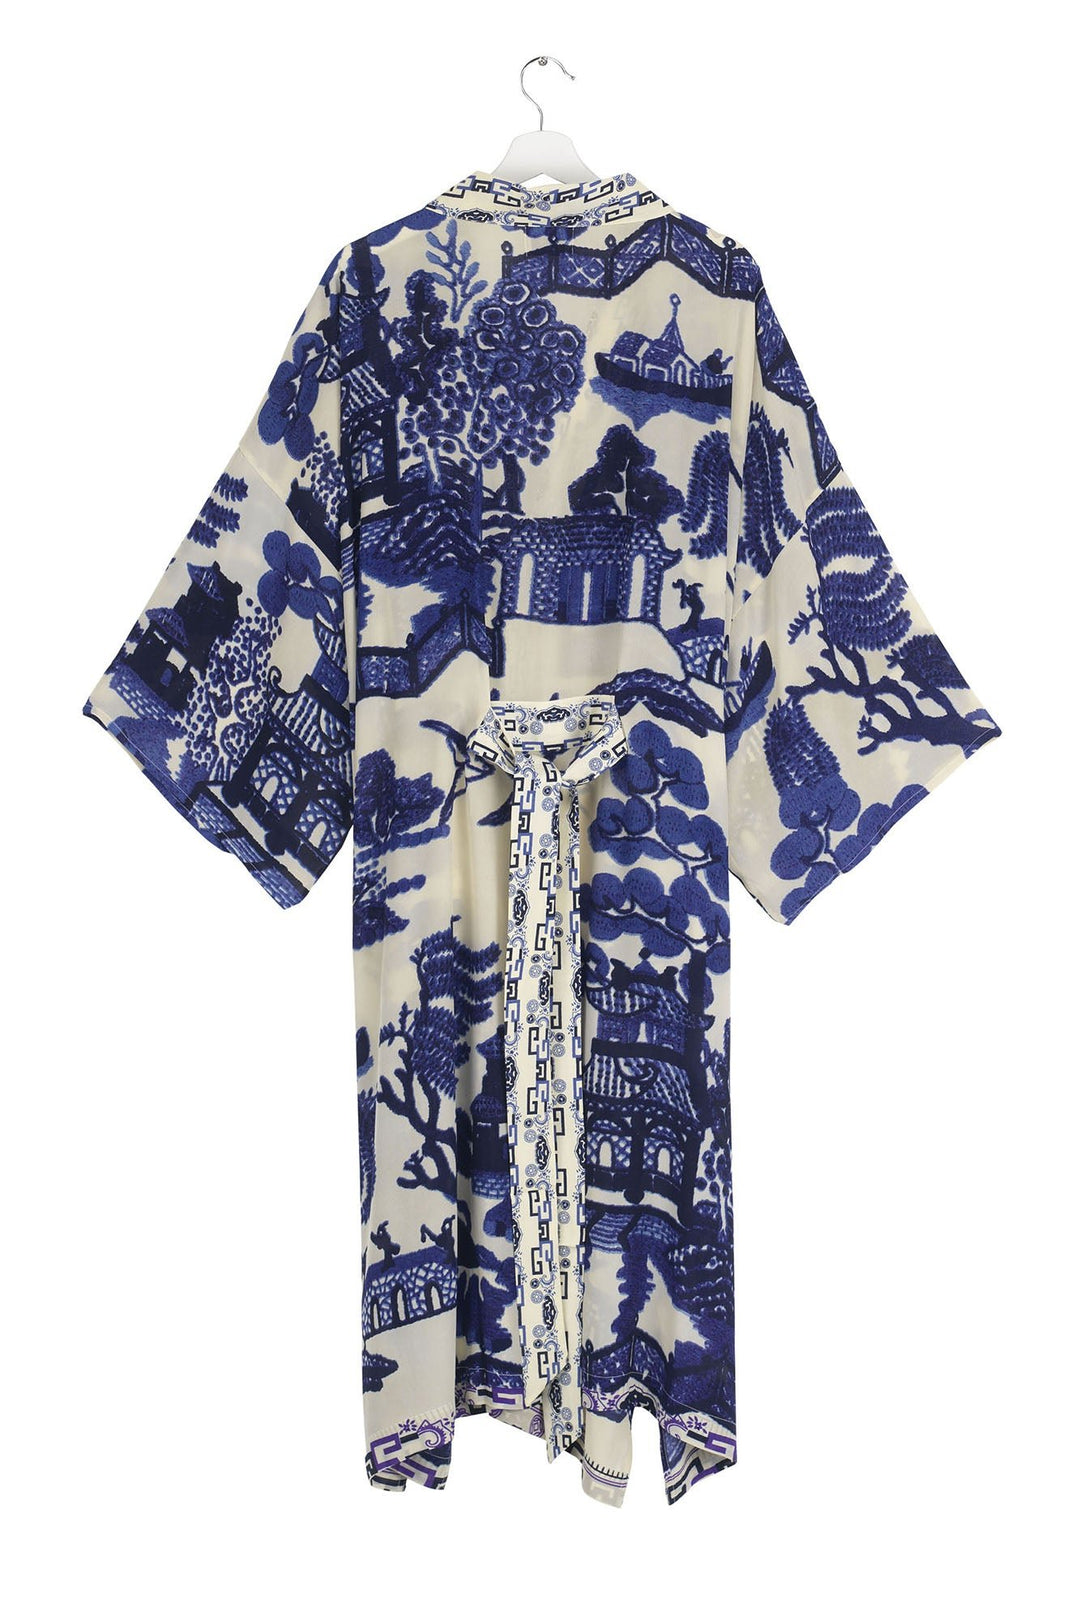 Giant Willow Blue Crepe Long Kimono - One Hundred Stars